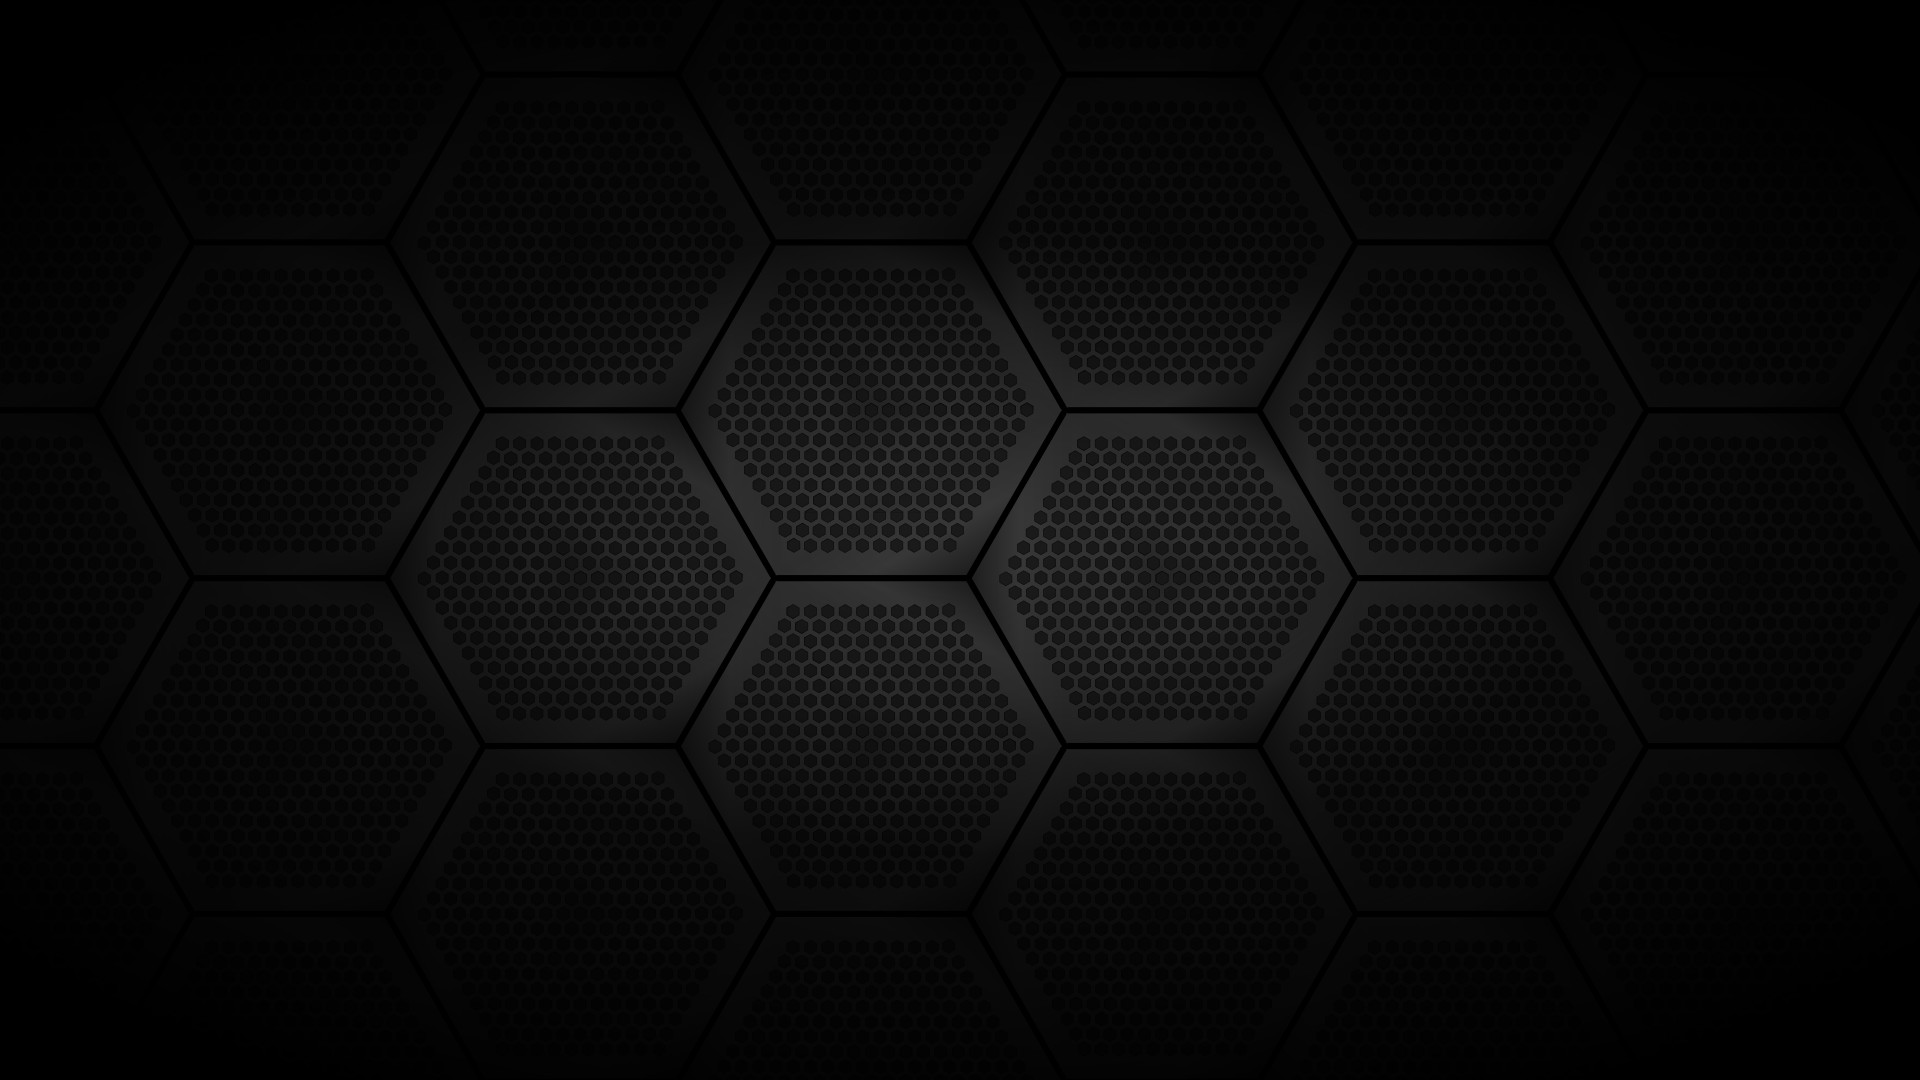 Black theme Wallpaper 1080p (70+ images)